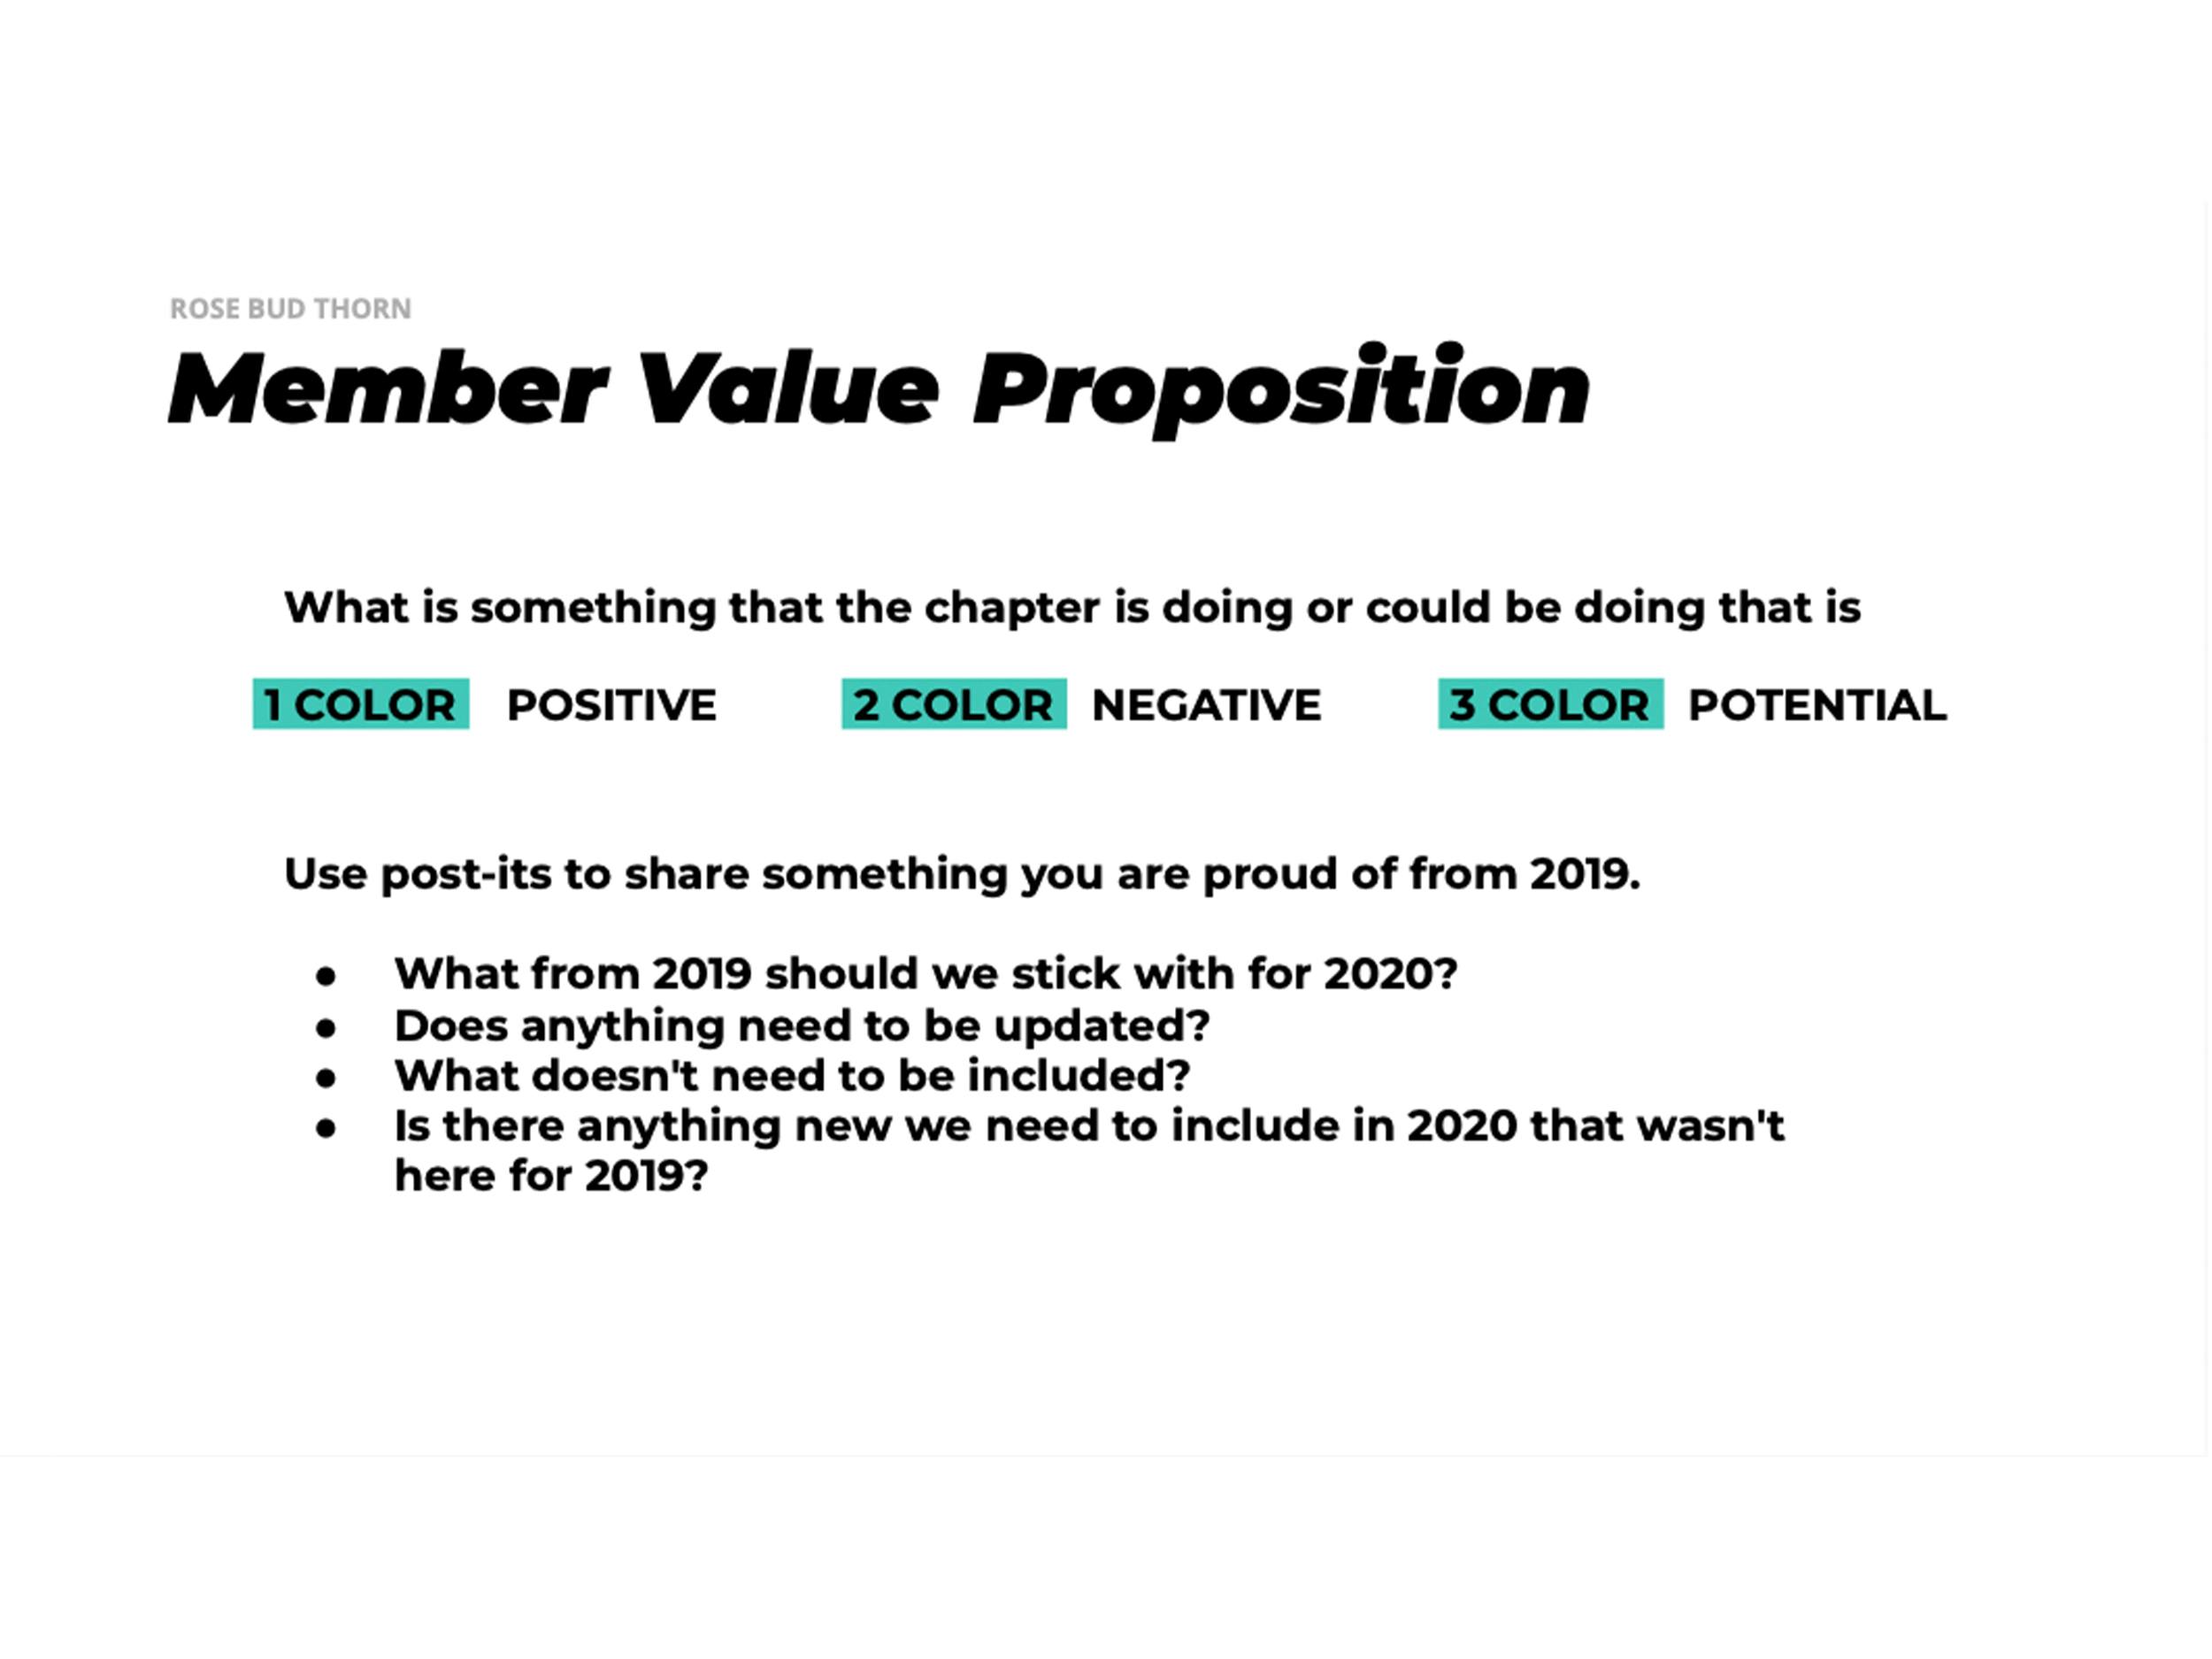 Member value proposition